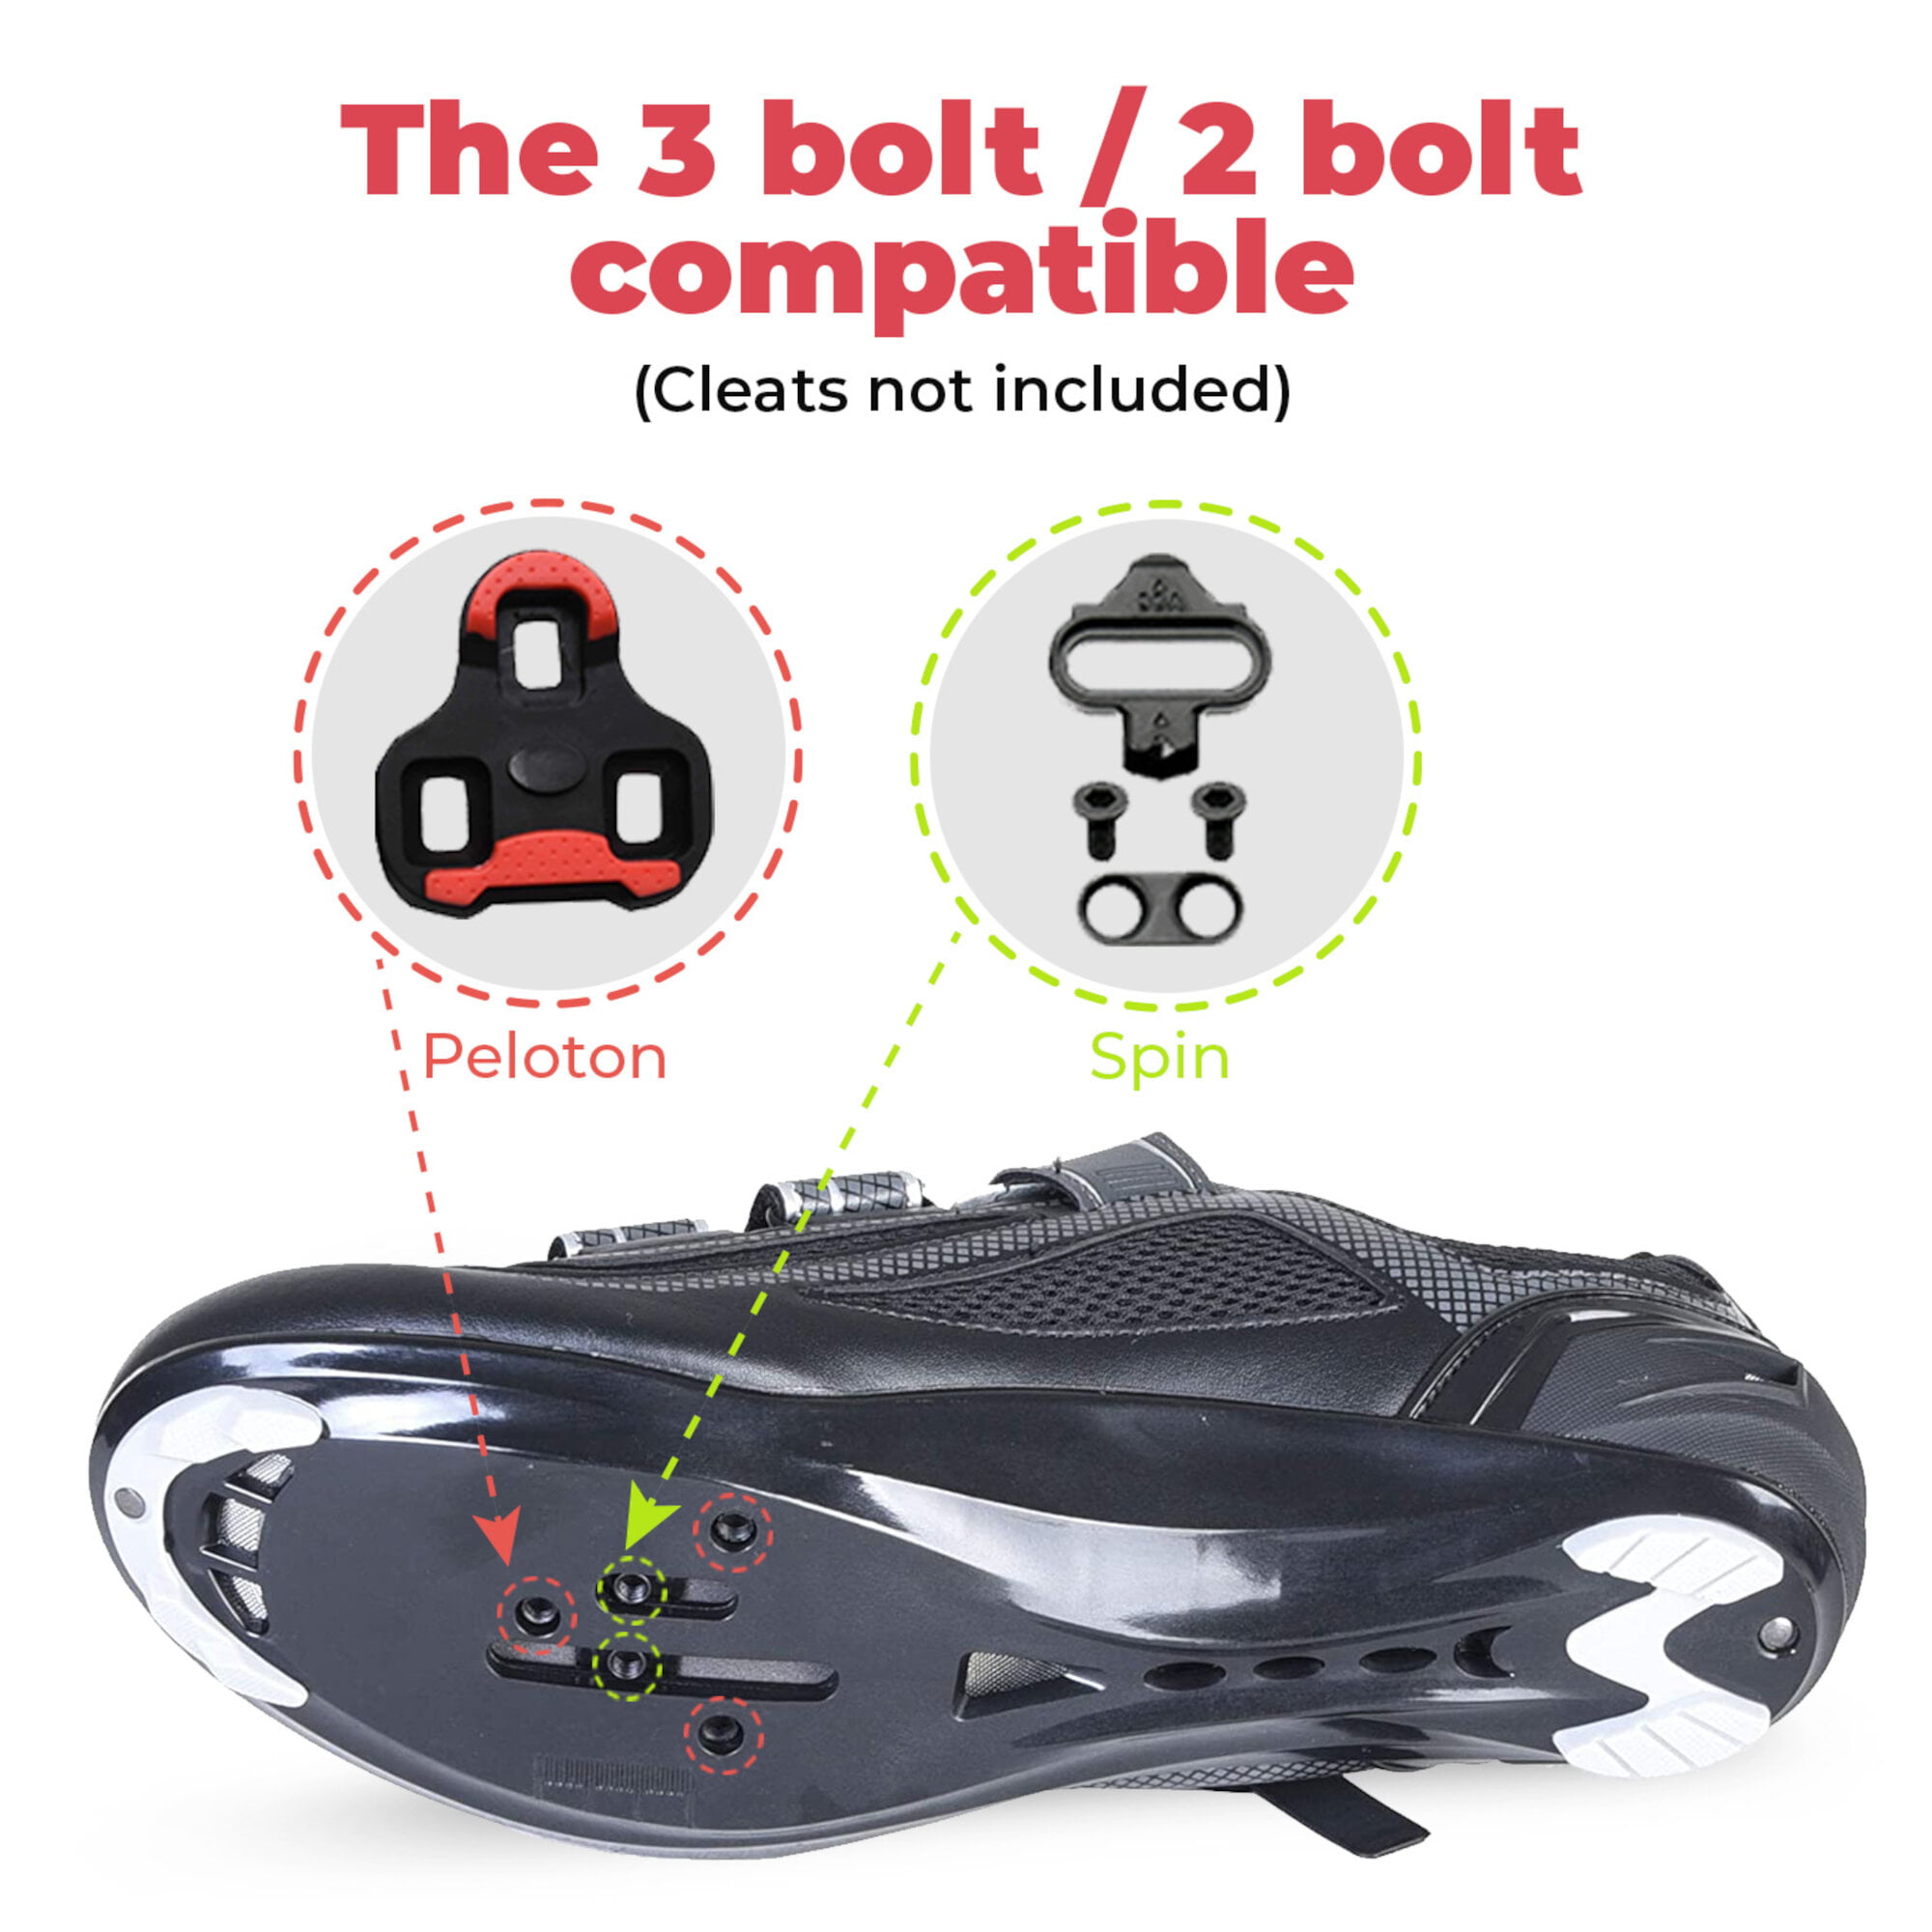 38 EU 3 Bolt Road Cleat Compatible Quick Lace Details about   Gavin Pro Road Cycling Shoe 